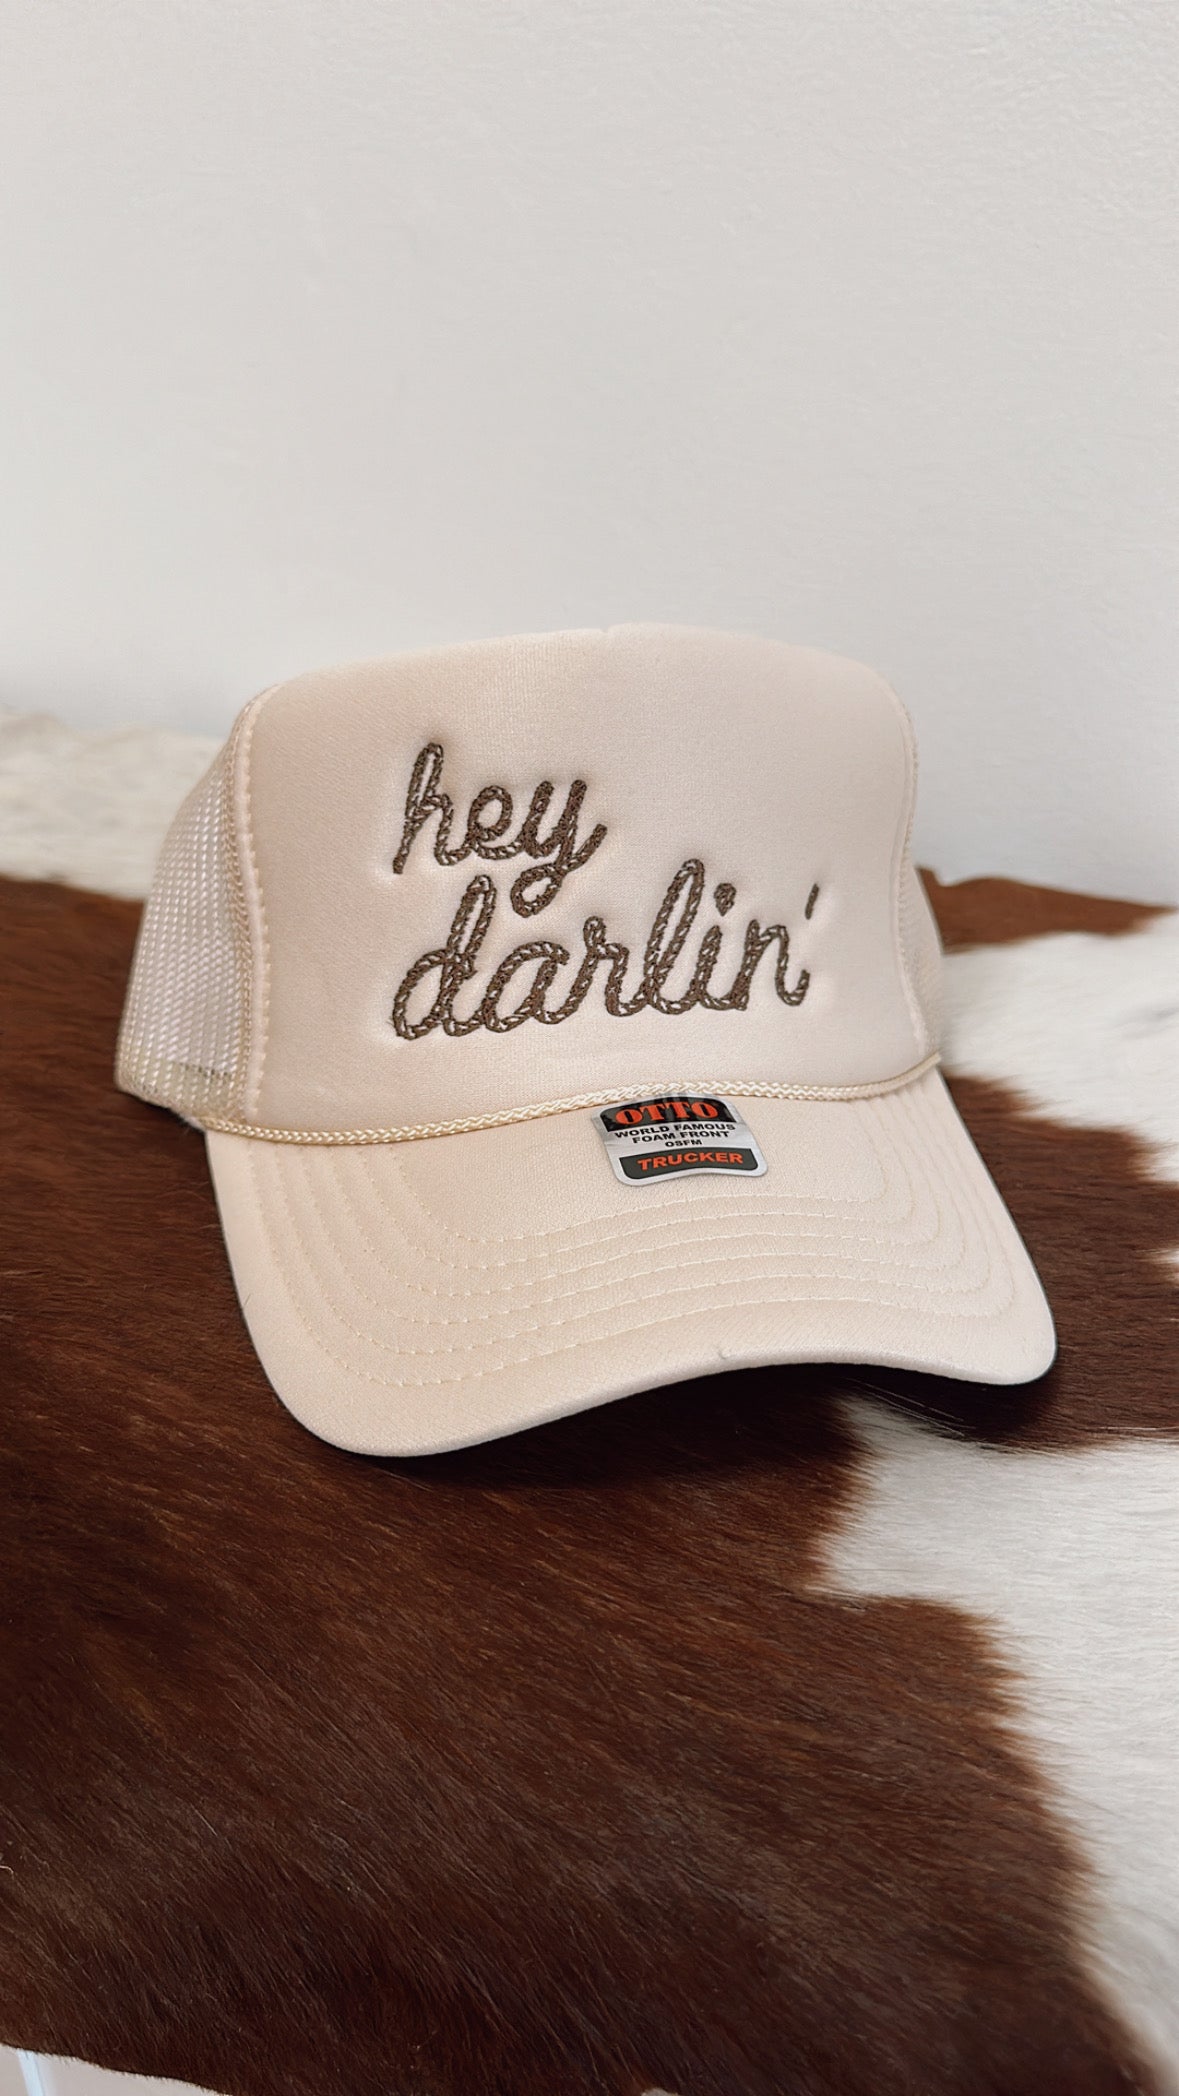 Hey Darlin' Trucker Hat - Brown/Tan